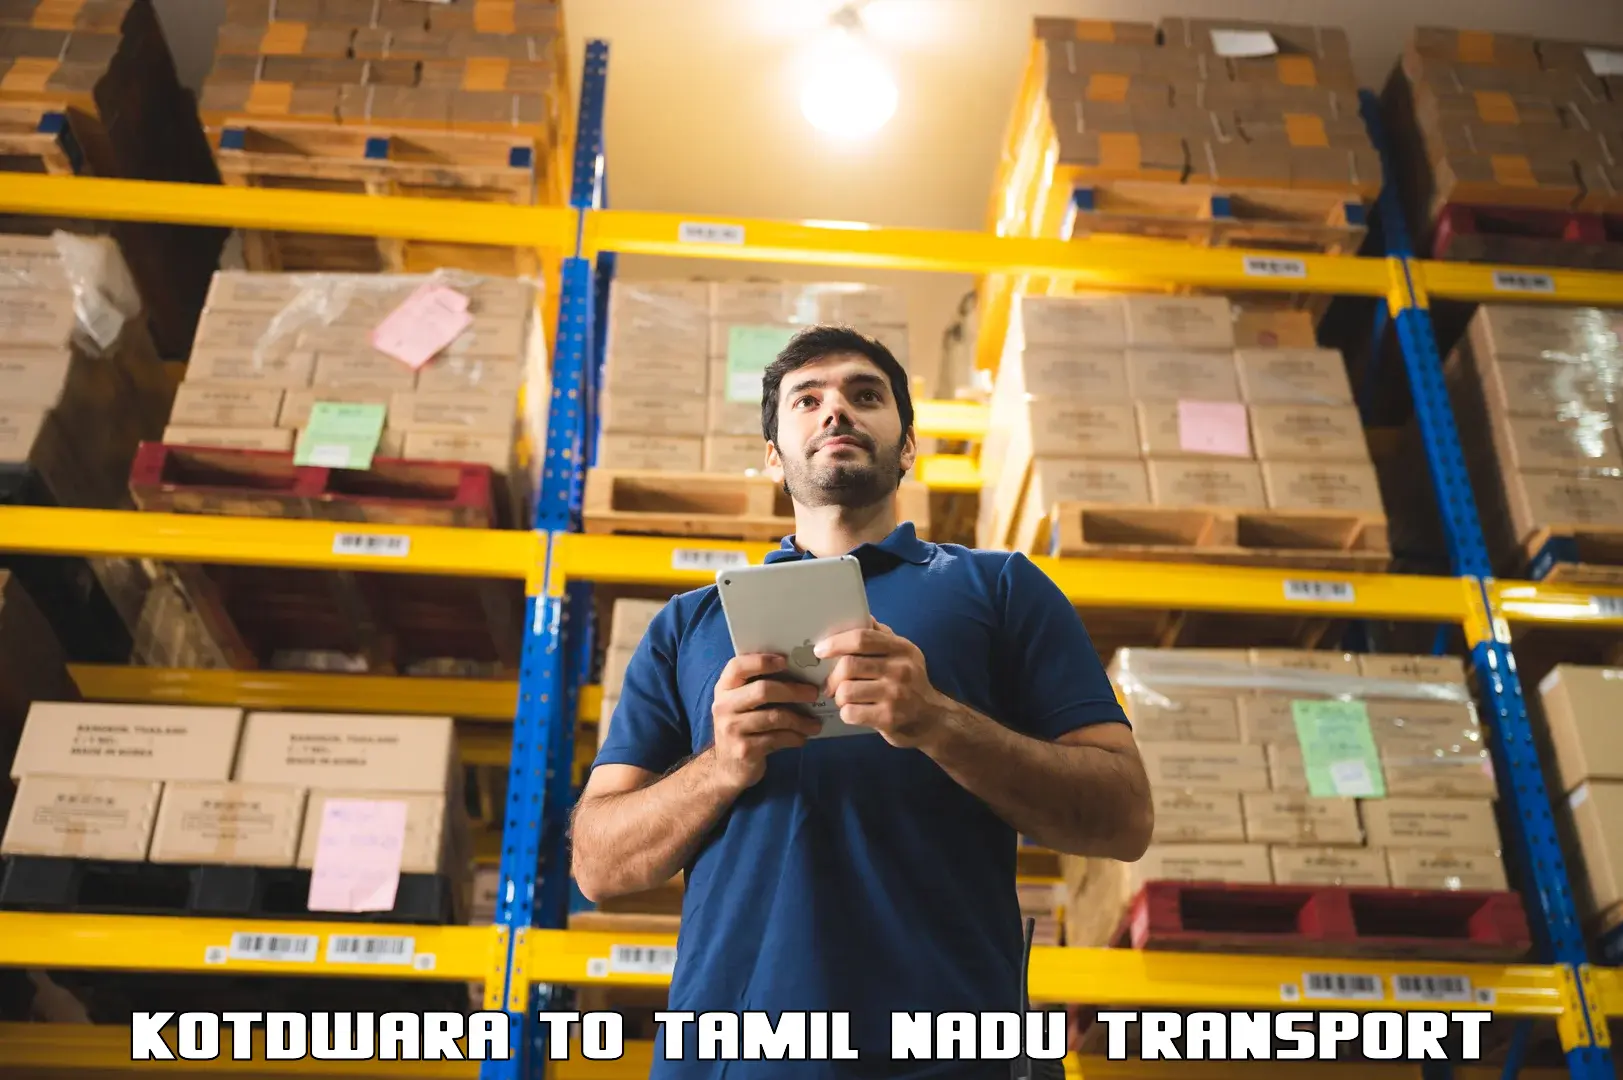 Online transport service Kotdwara to Tamil Nadu